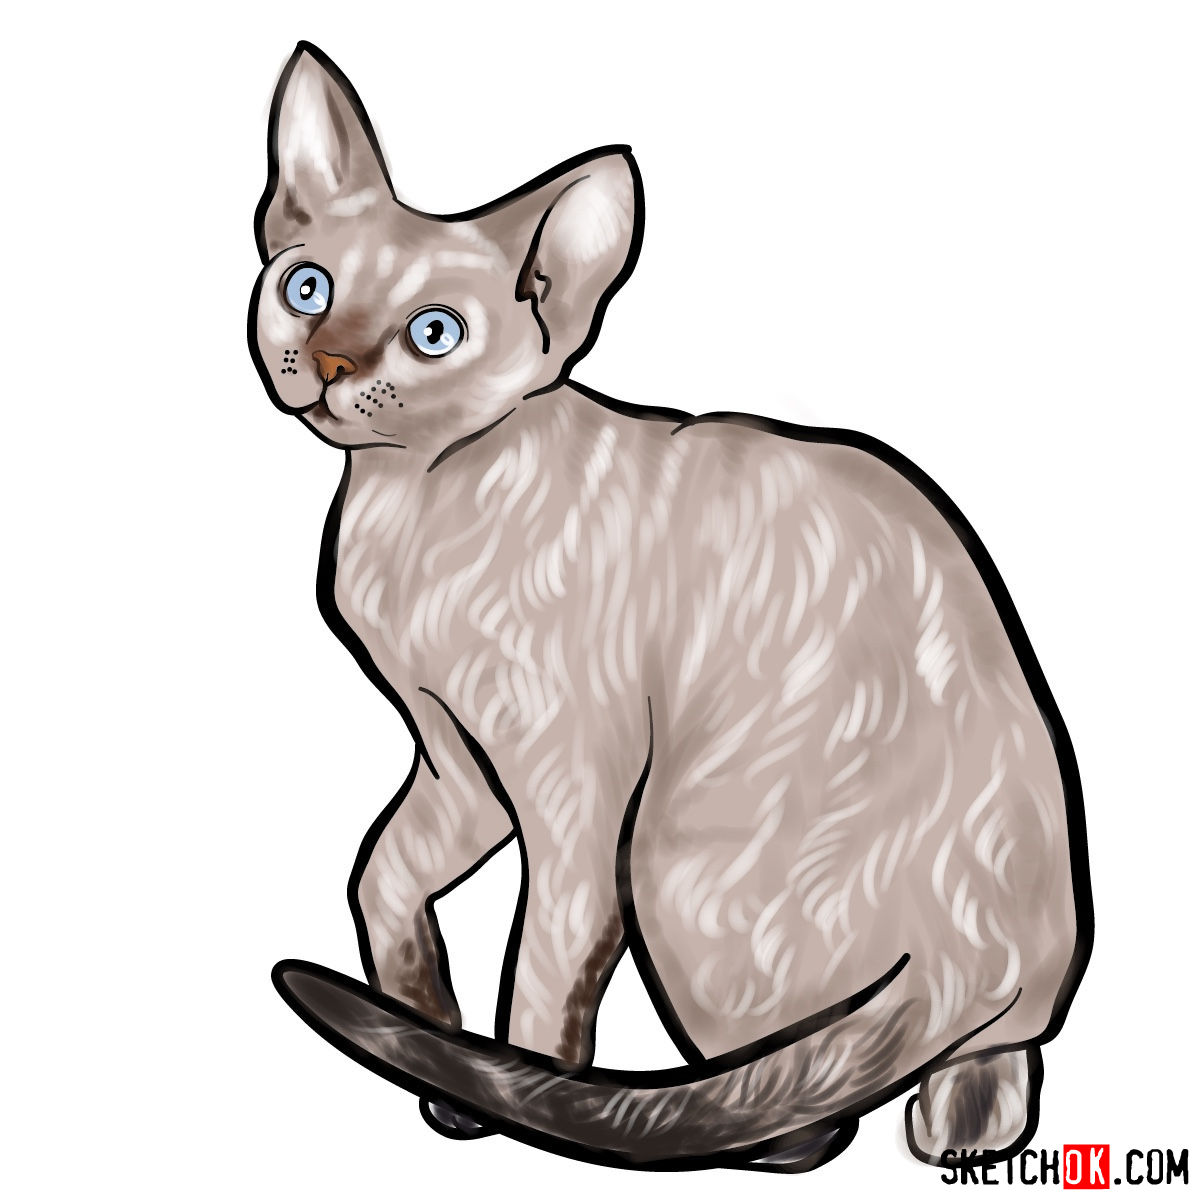 How to draw the Devon Rex cat